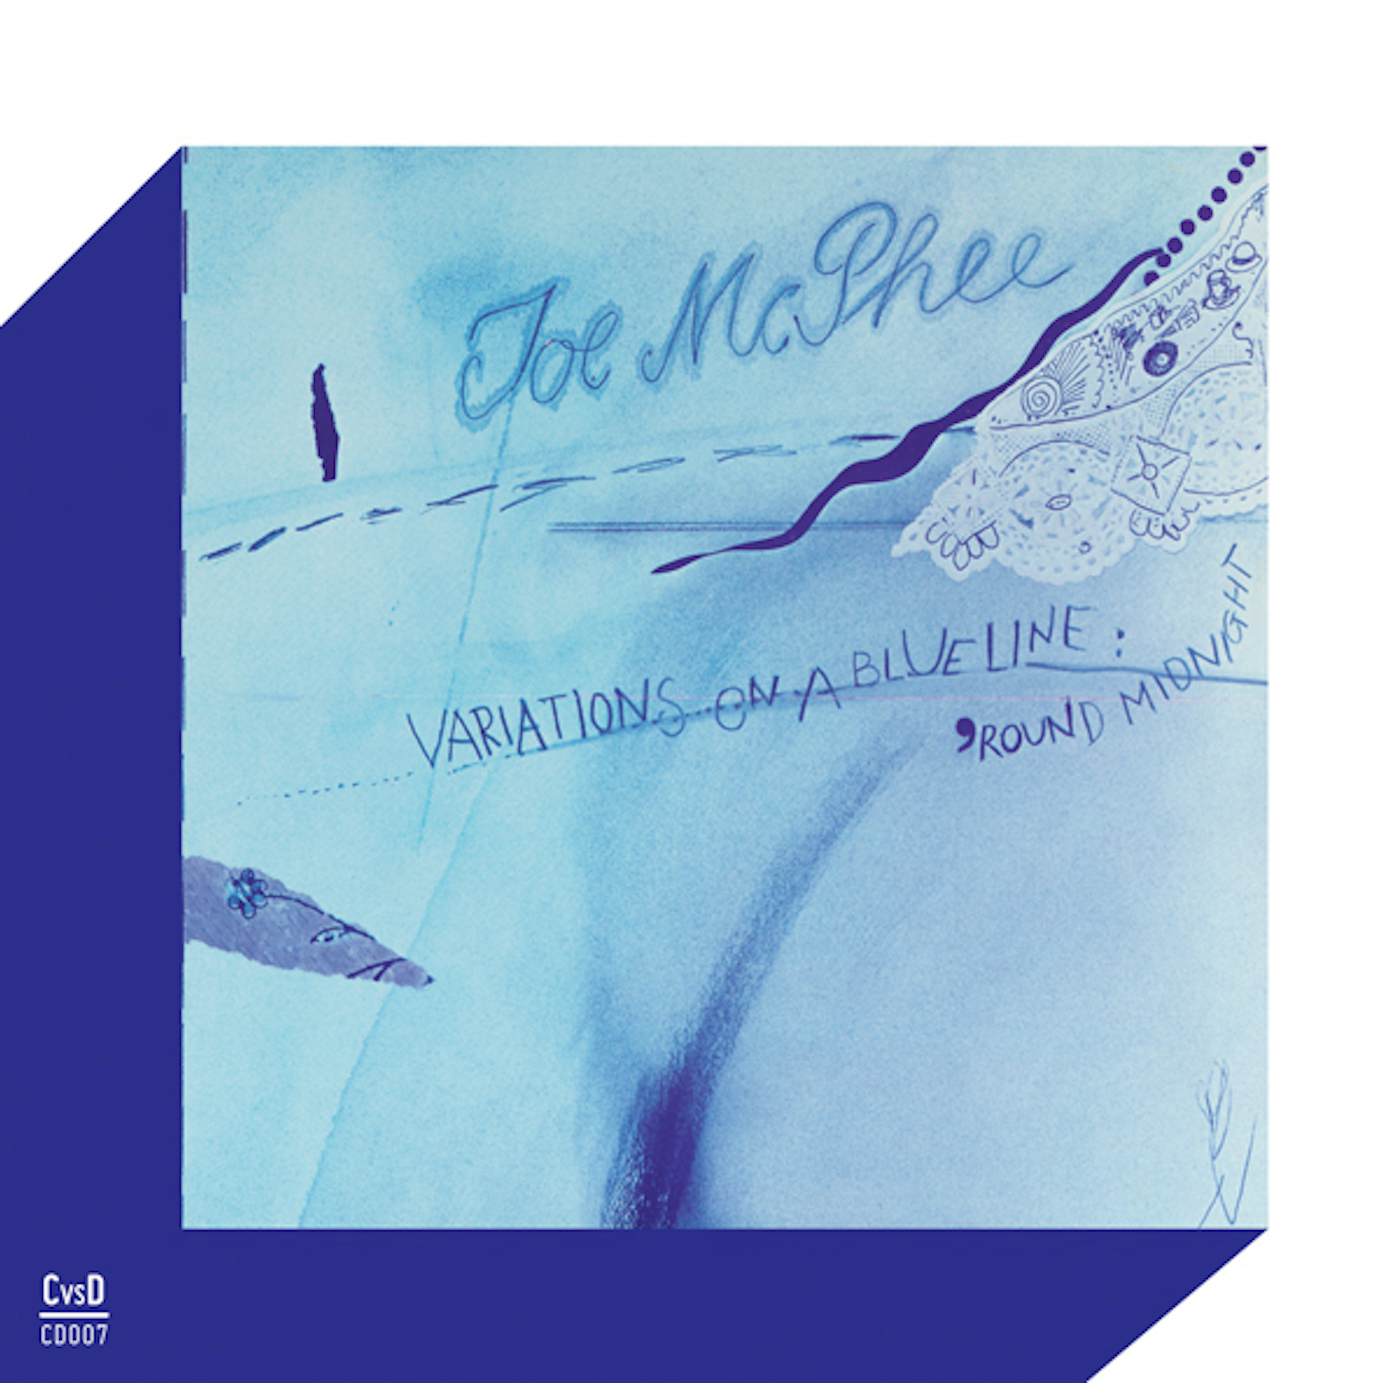 Joe Mcphee VARIATIONS ON A BLUE LINE / 'ROUND MIDNIGHT CD